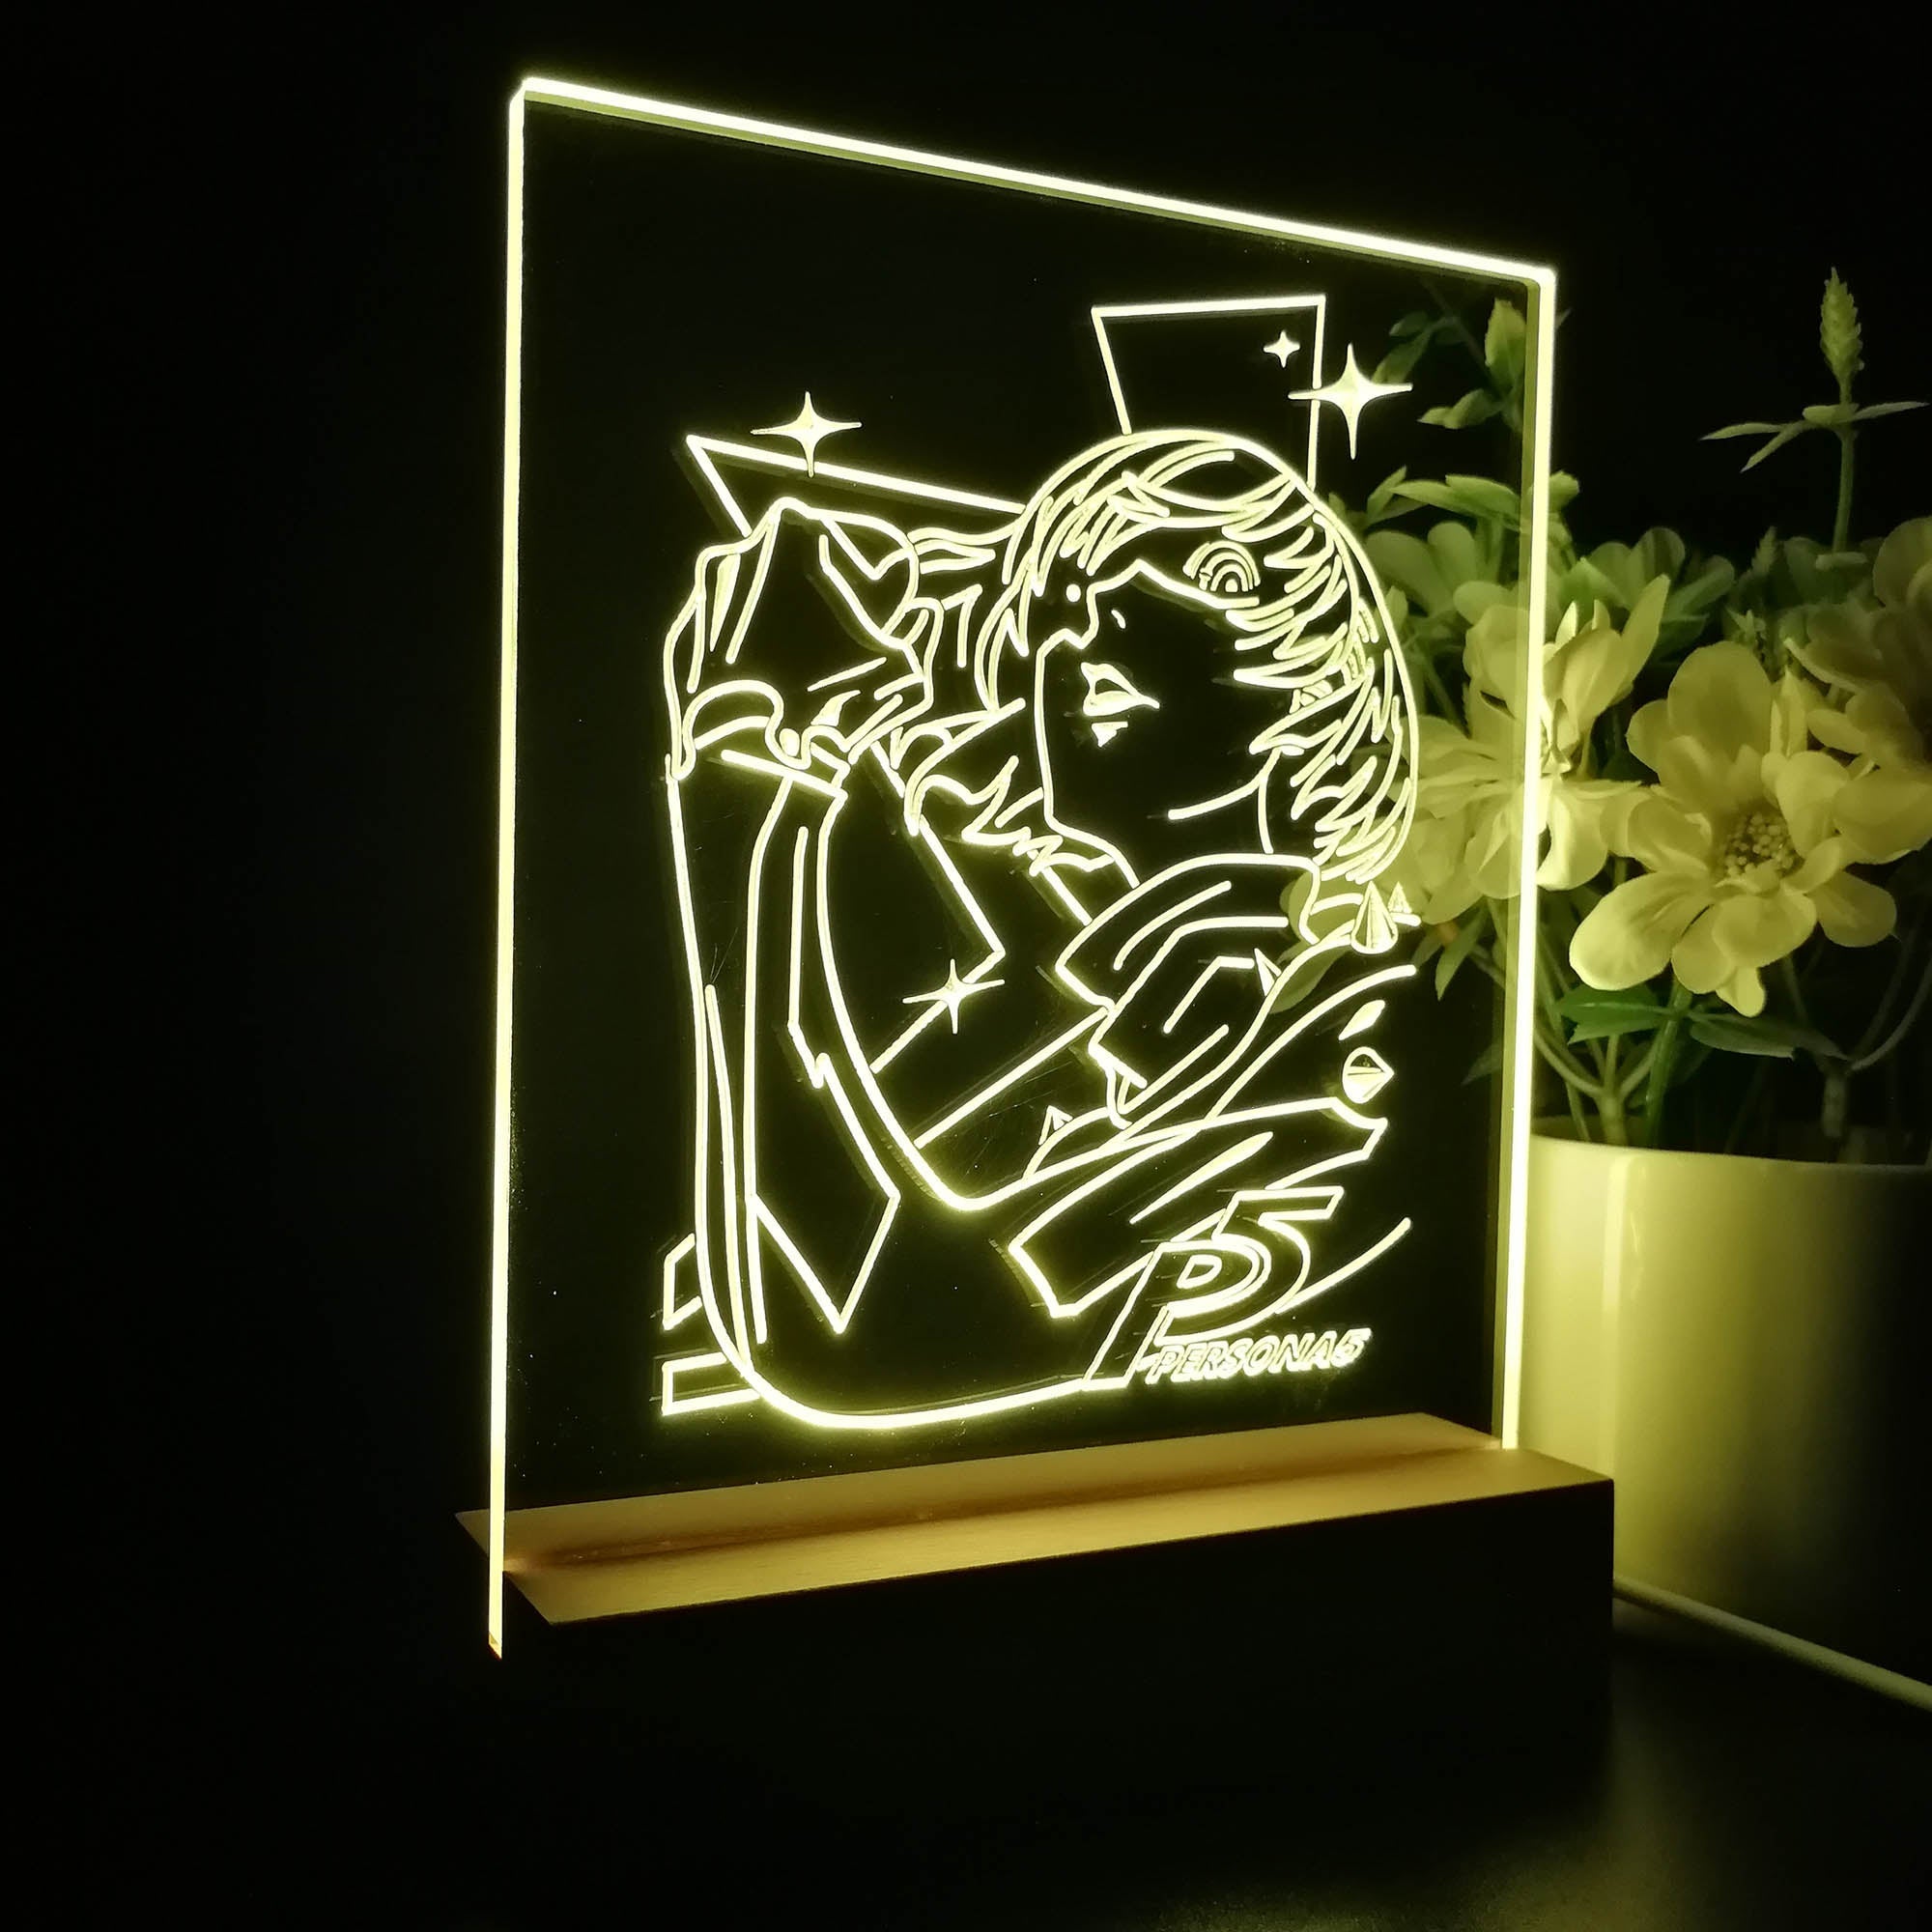 Persona 5 Game Room LED Sign Lamp Display